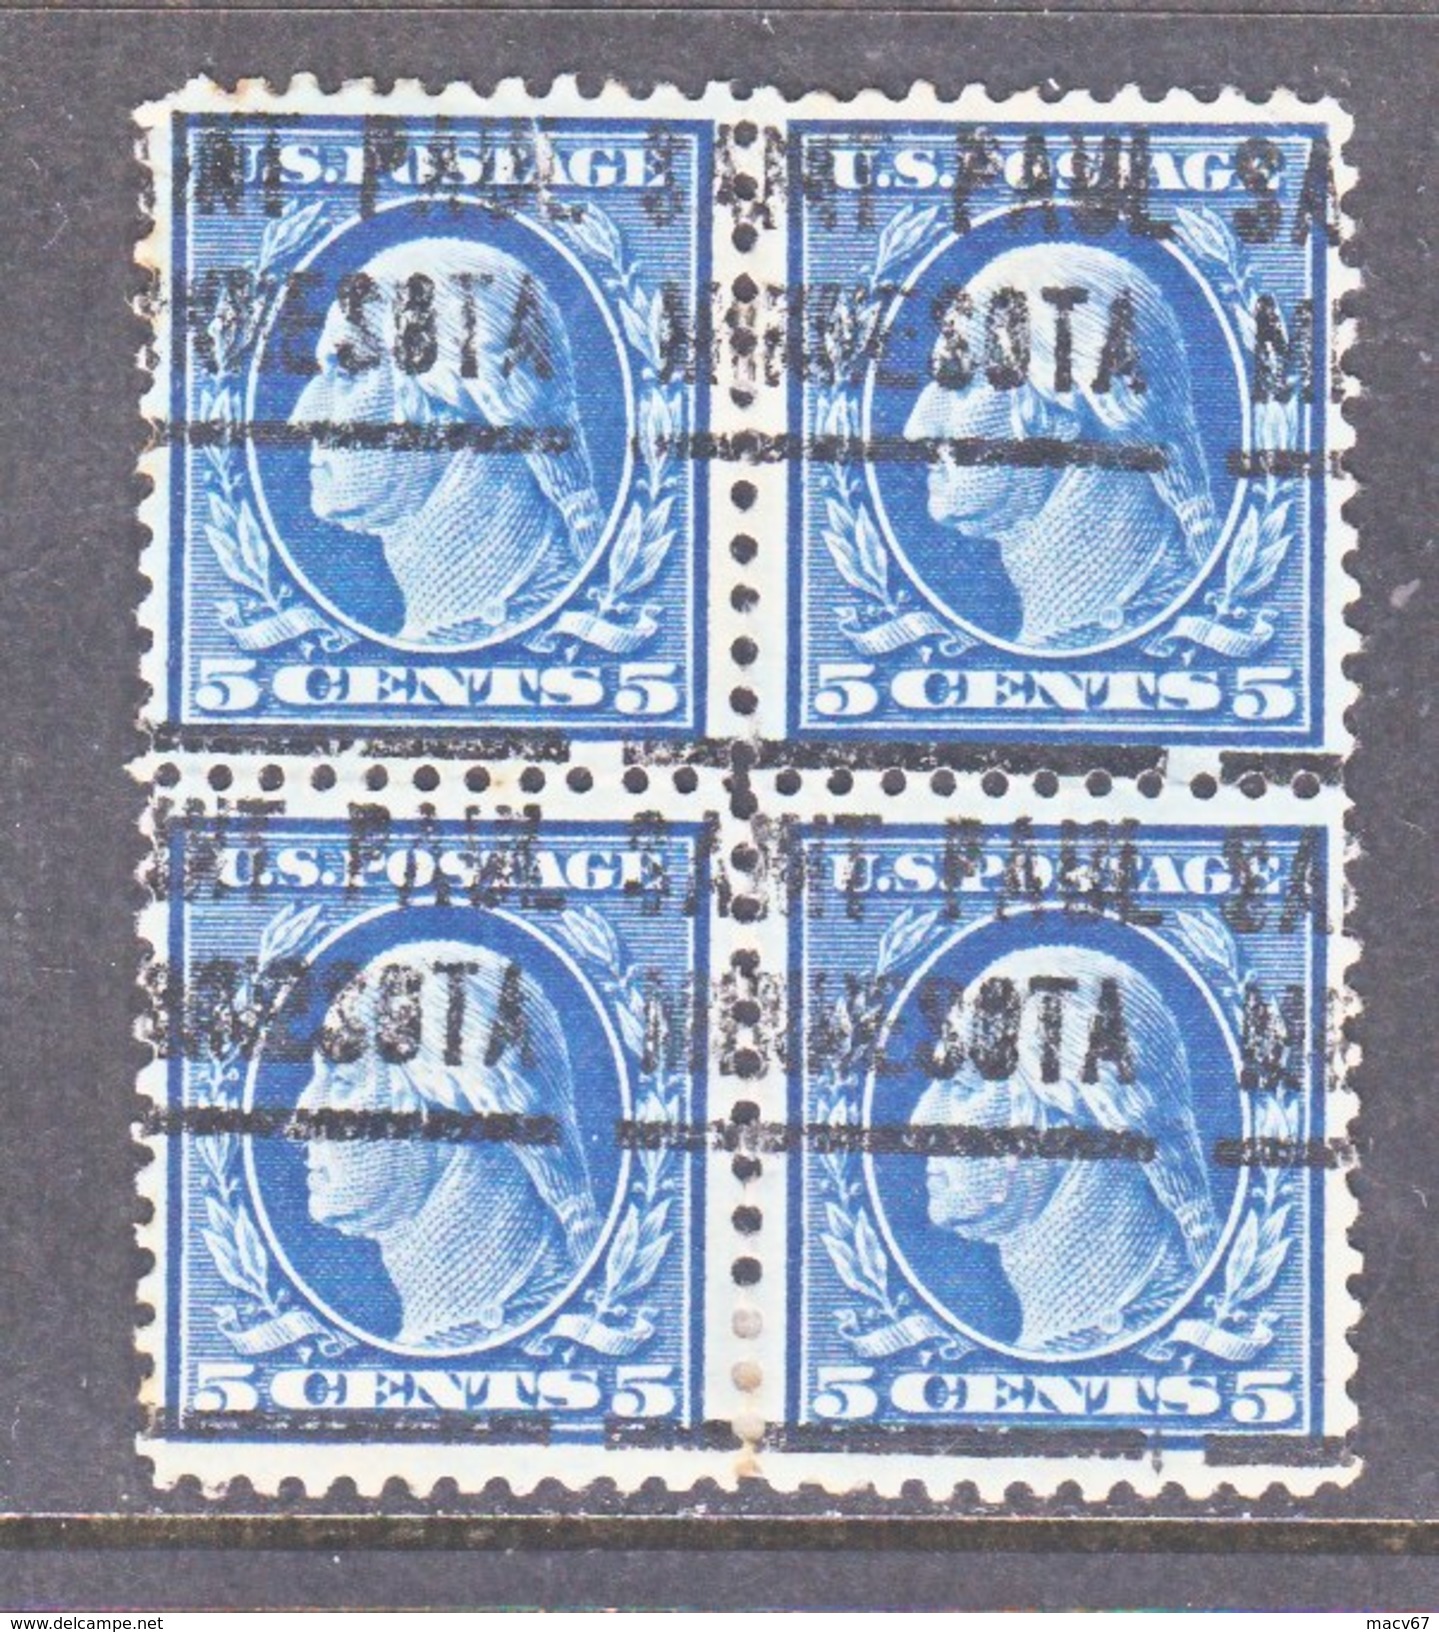 U.S. 504 X 4  (o)  MINNESOTA  FLAT PRESS  NO Wmk. Perf 11  1917-19 Issue - Préoblitérés